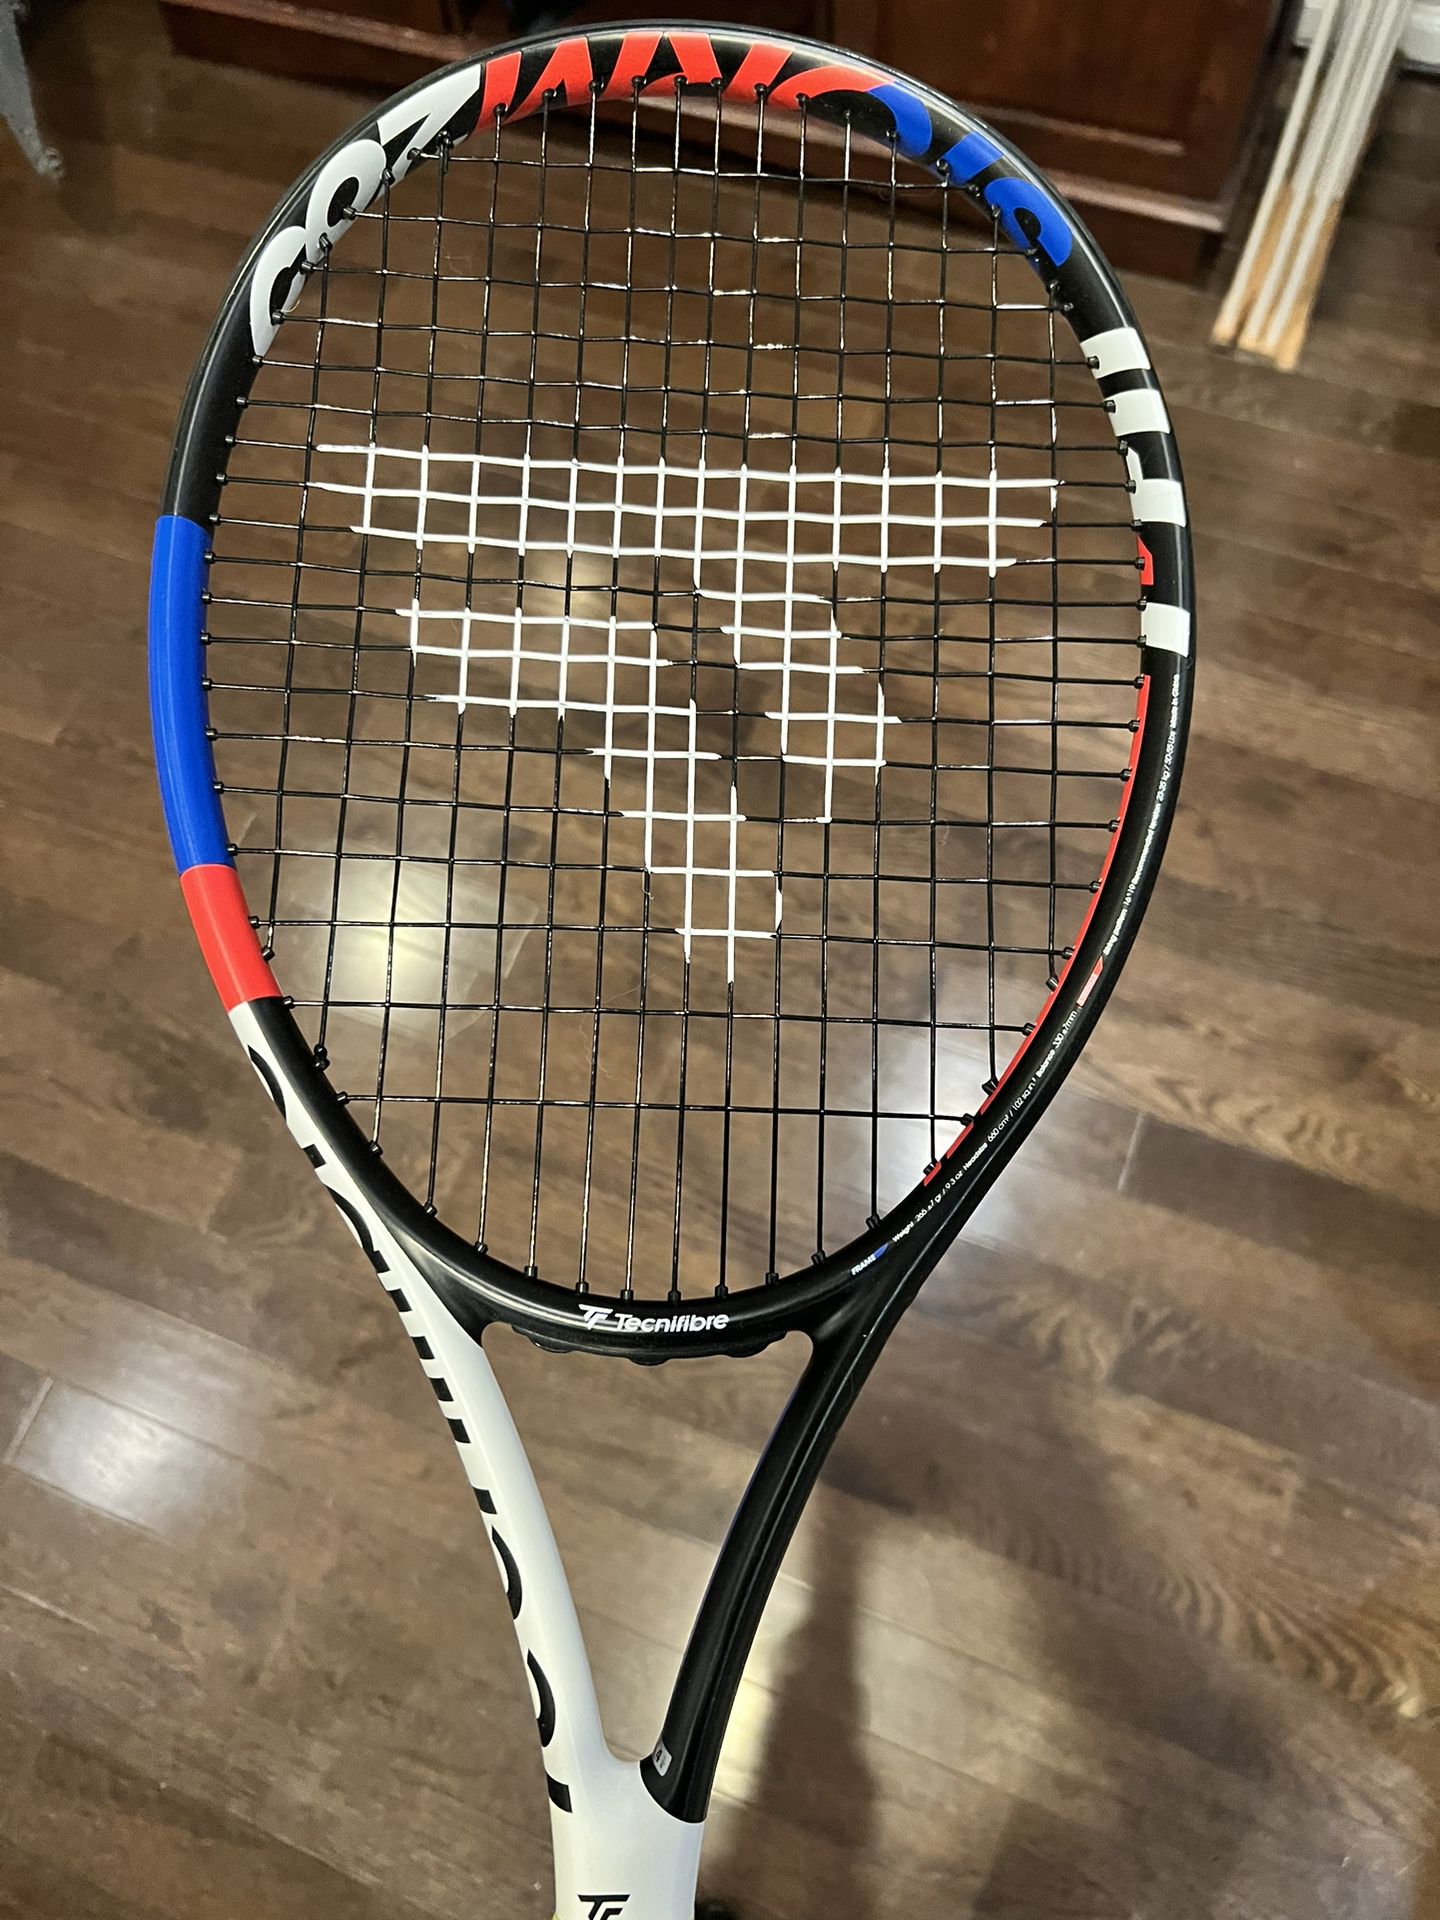 Beginner-friendly Tennis Racket